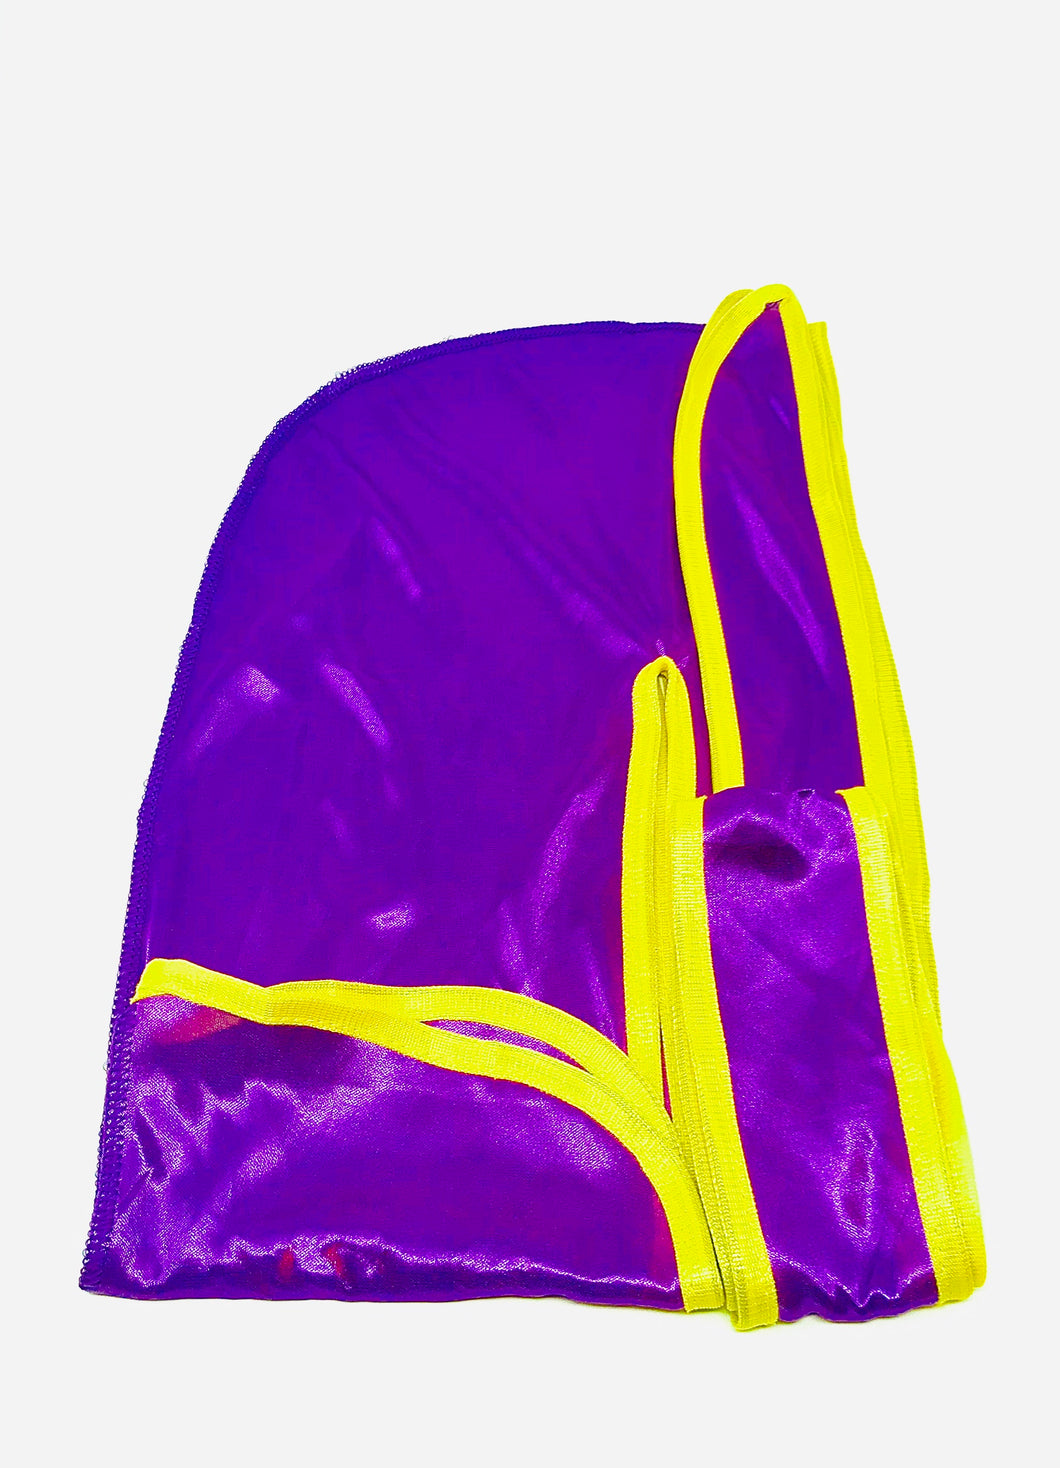 Rimix *PATENT PENDING* Silky Durag **Limited Edition - Purple/Yellow Trim